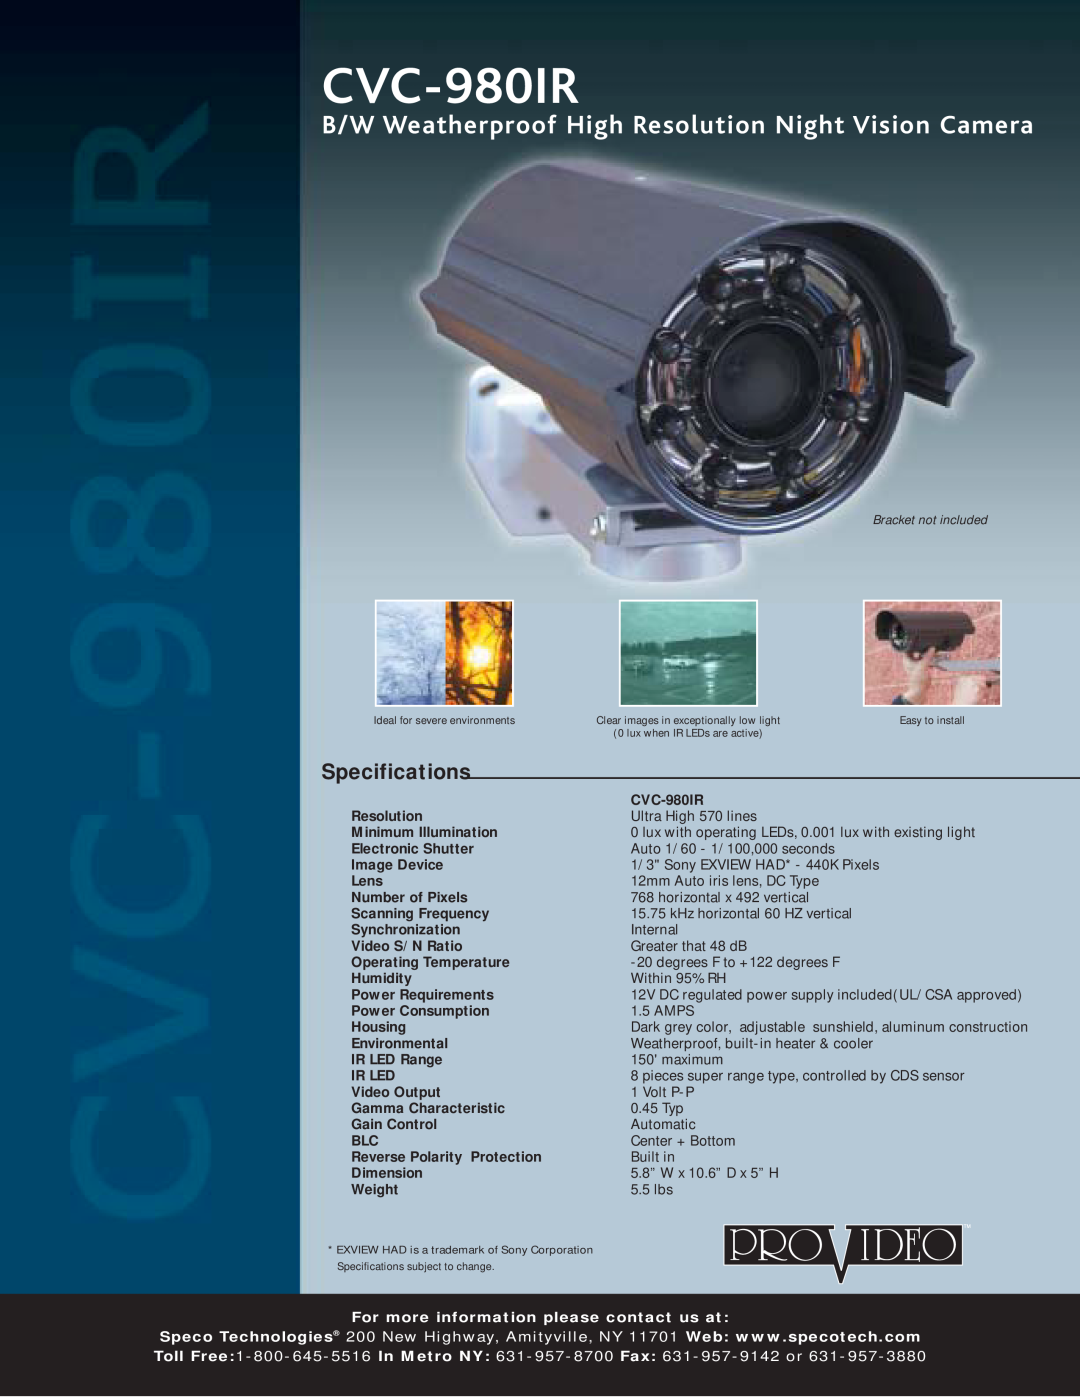 Speco Technologies CVC-980 IR specifications CVC-980IR, B/W Weatherproof High Resolution Night Vision Camera 